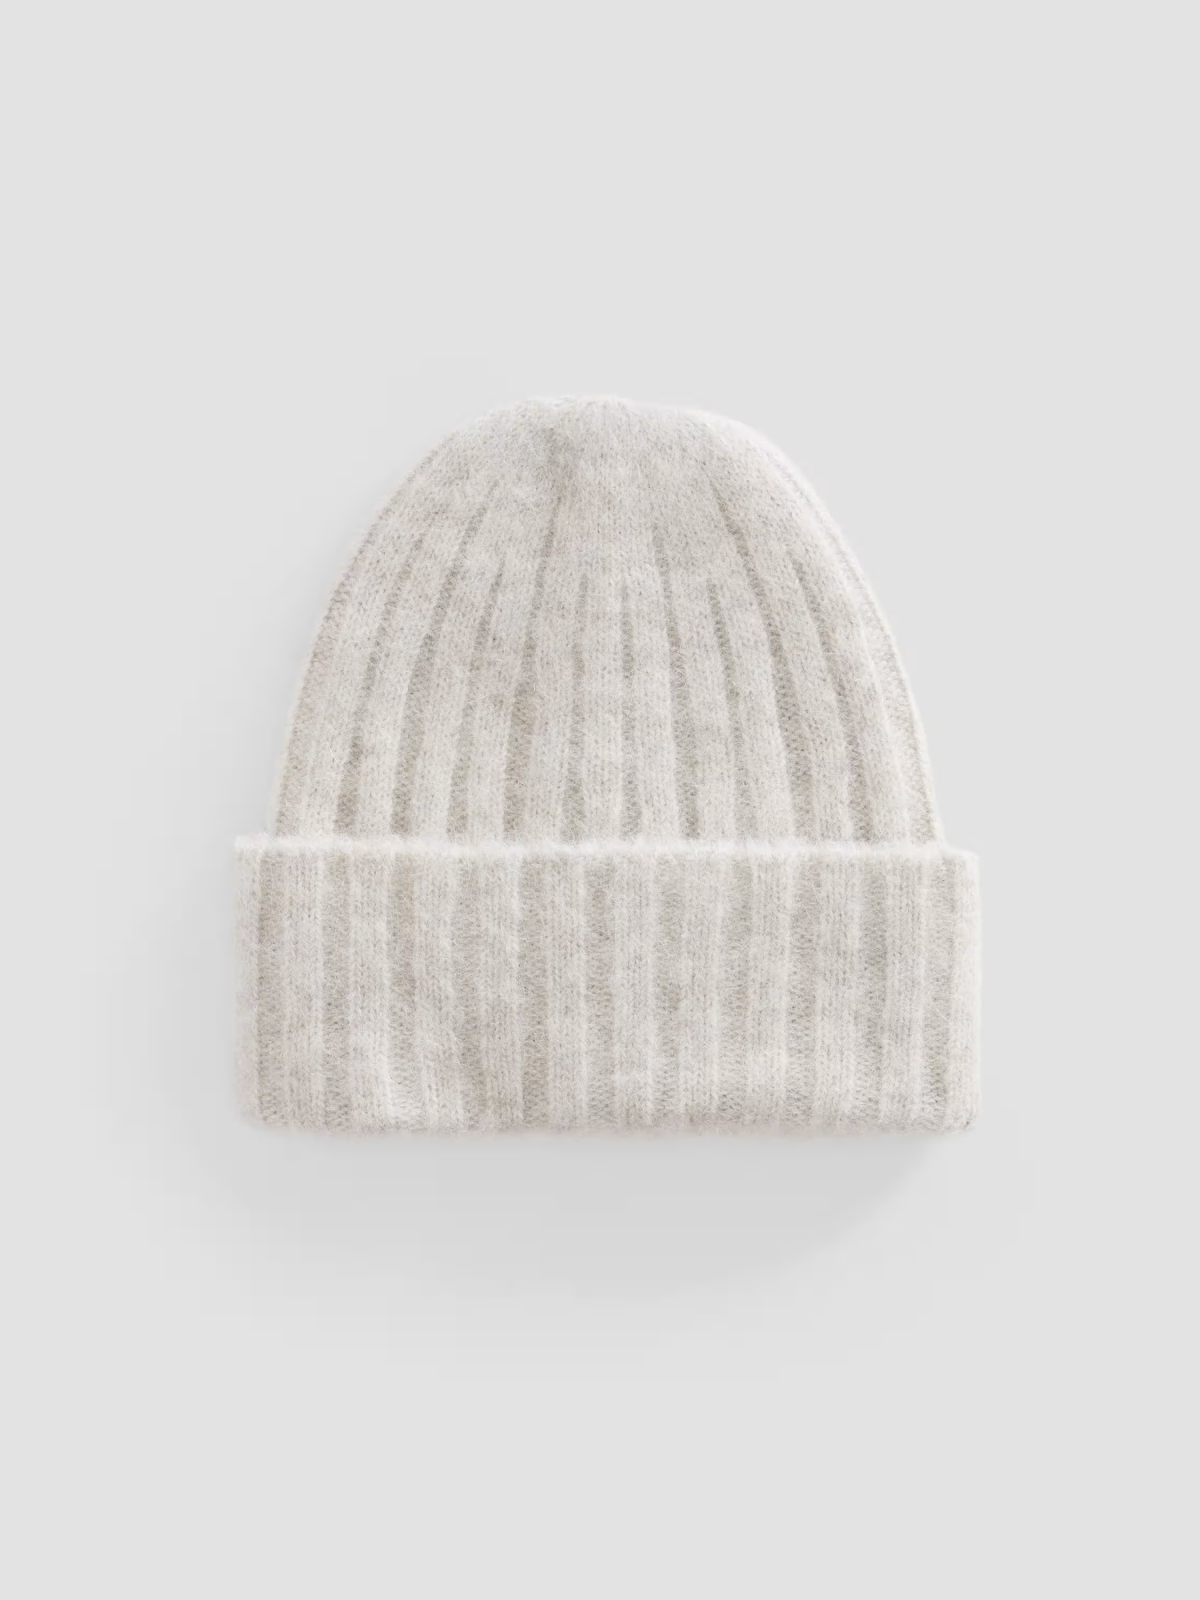 Sheep wool hat